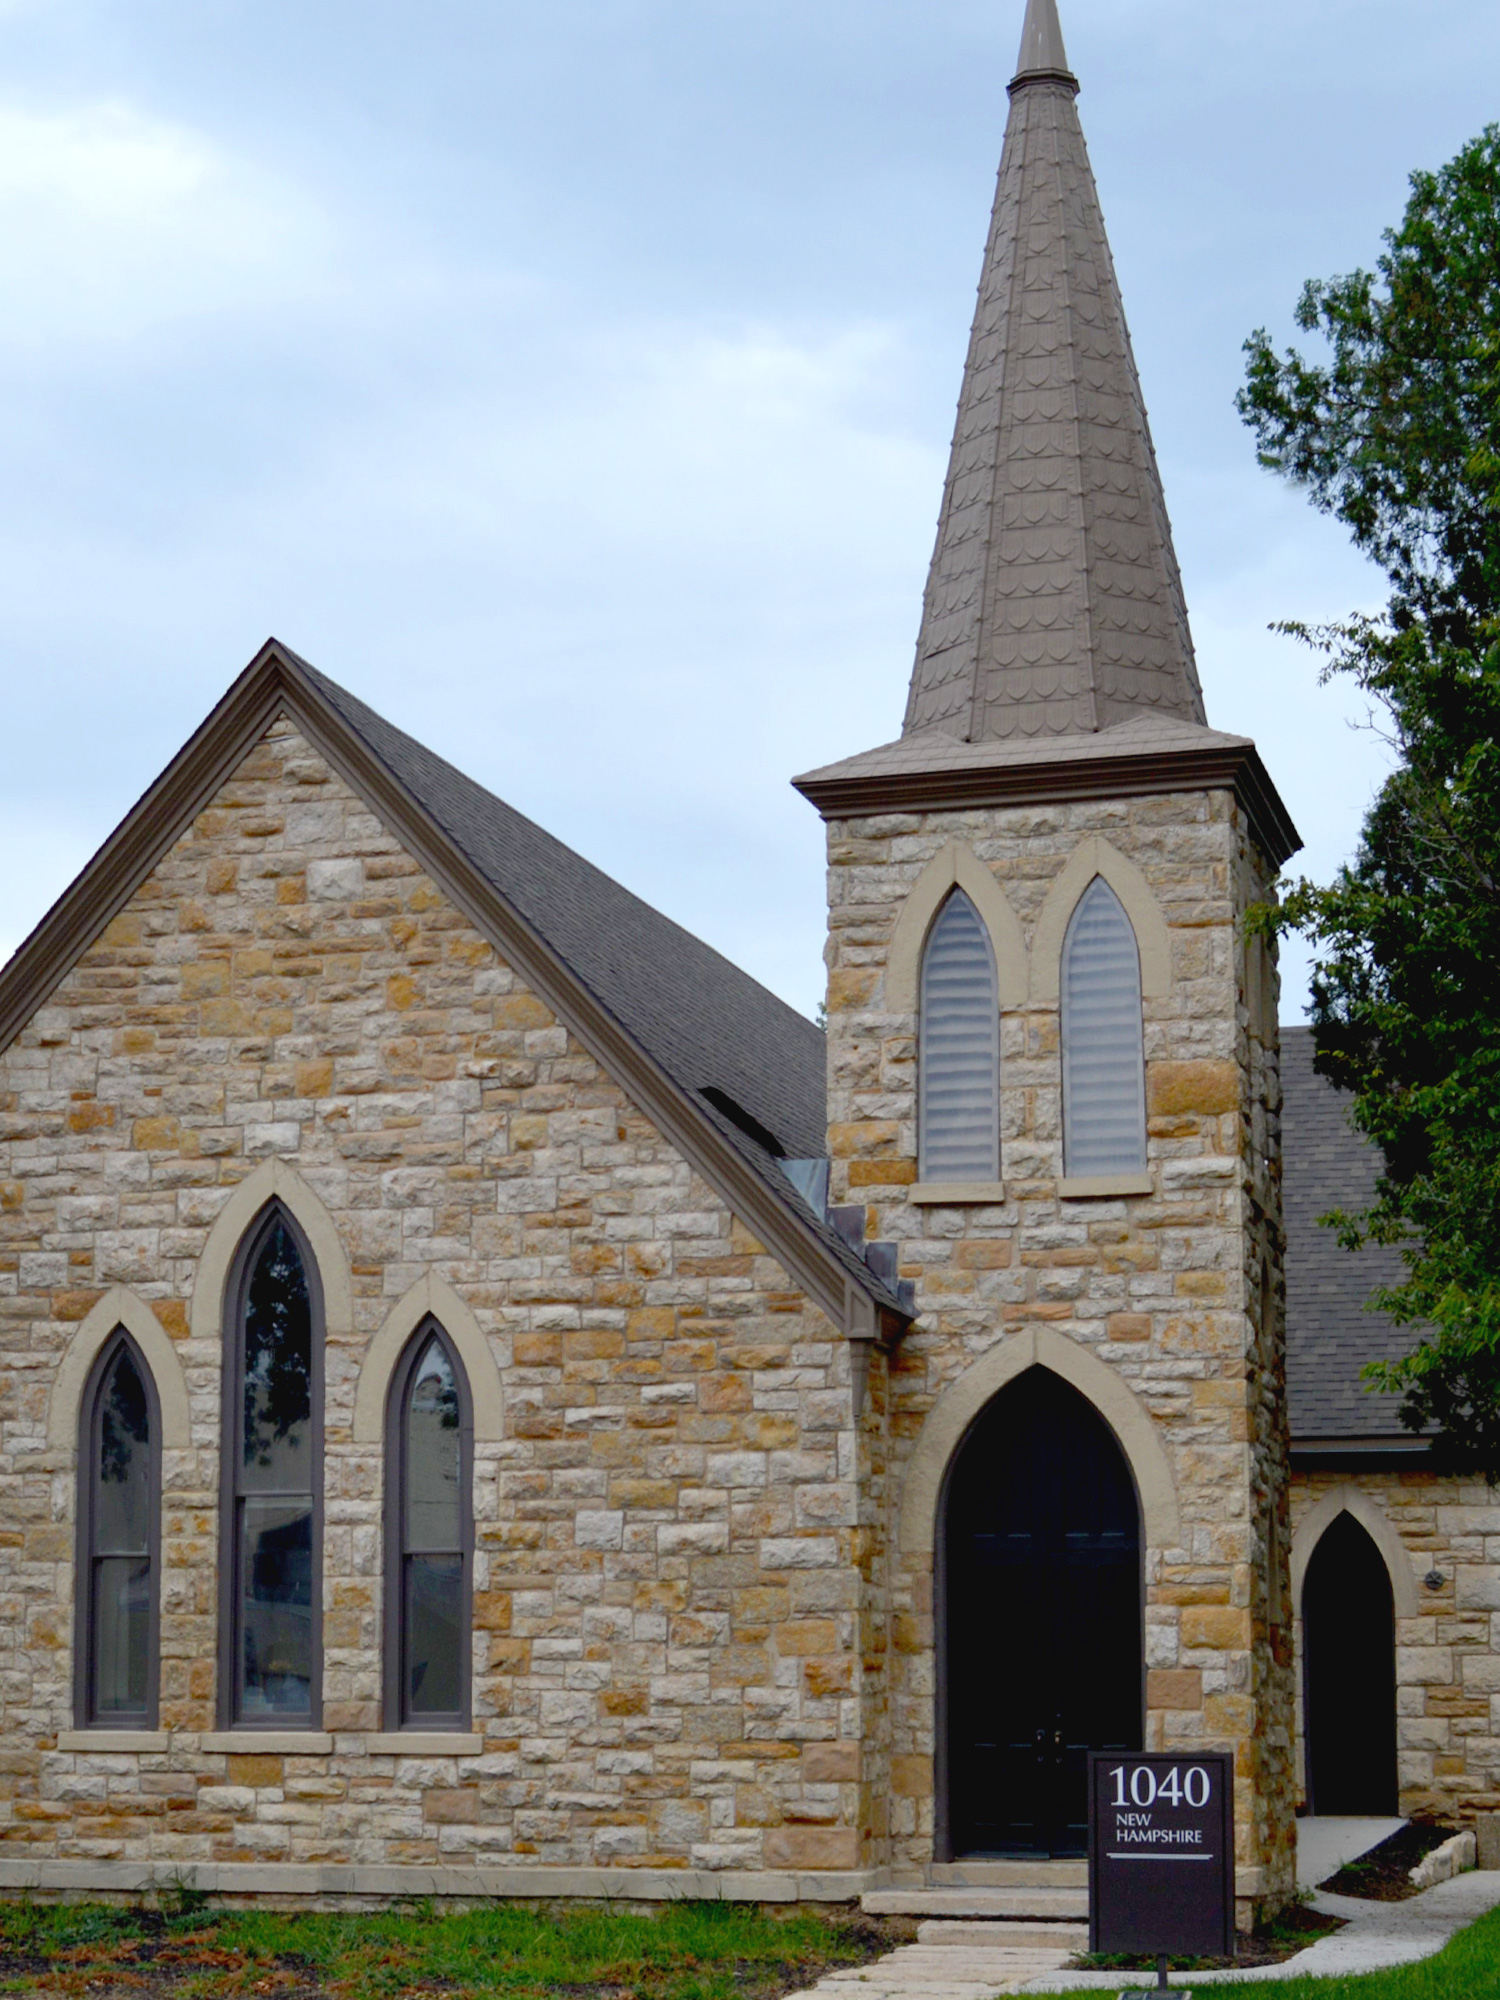 Limestone Church in Lawrence, KS (1870)